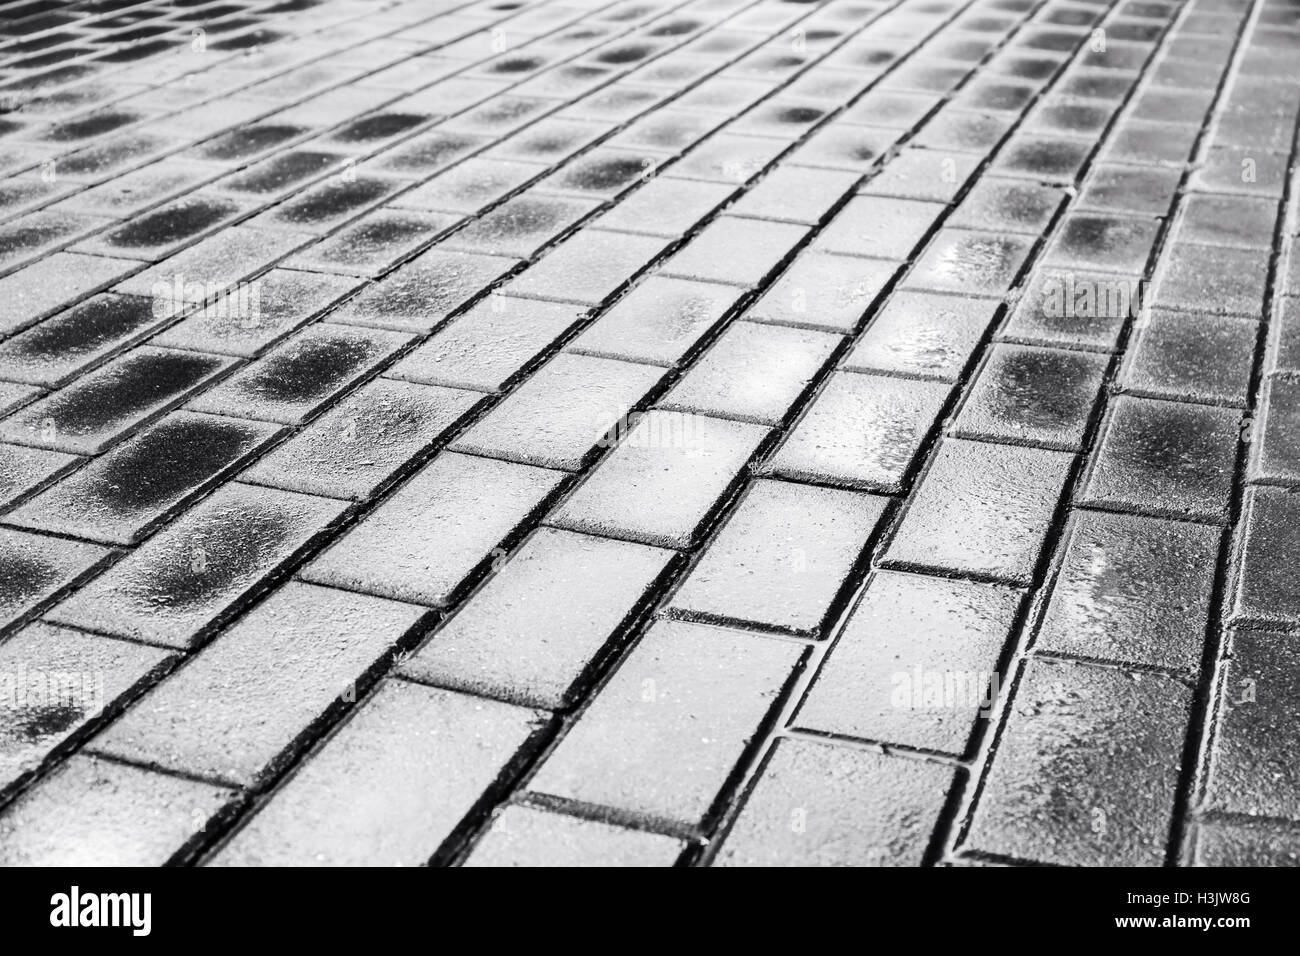 dark wet concrete urban pavement after heavy rain Stock Photo